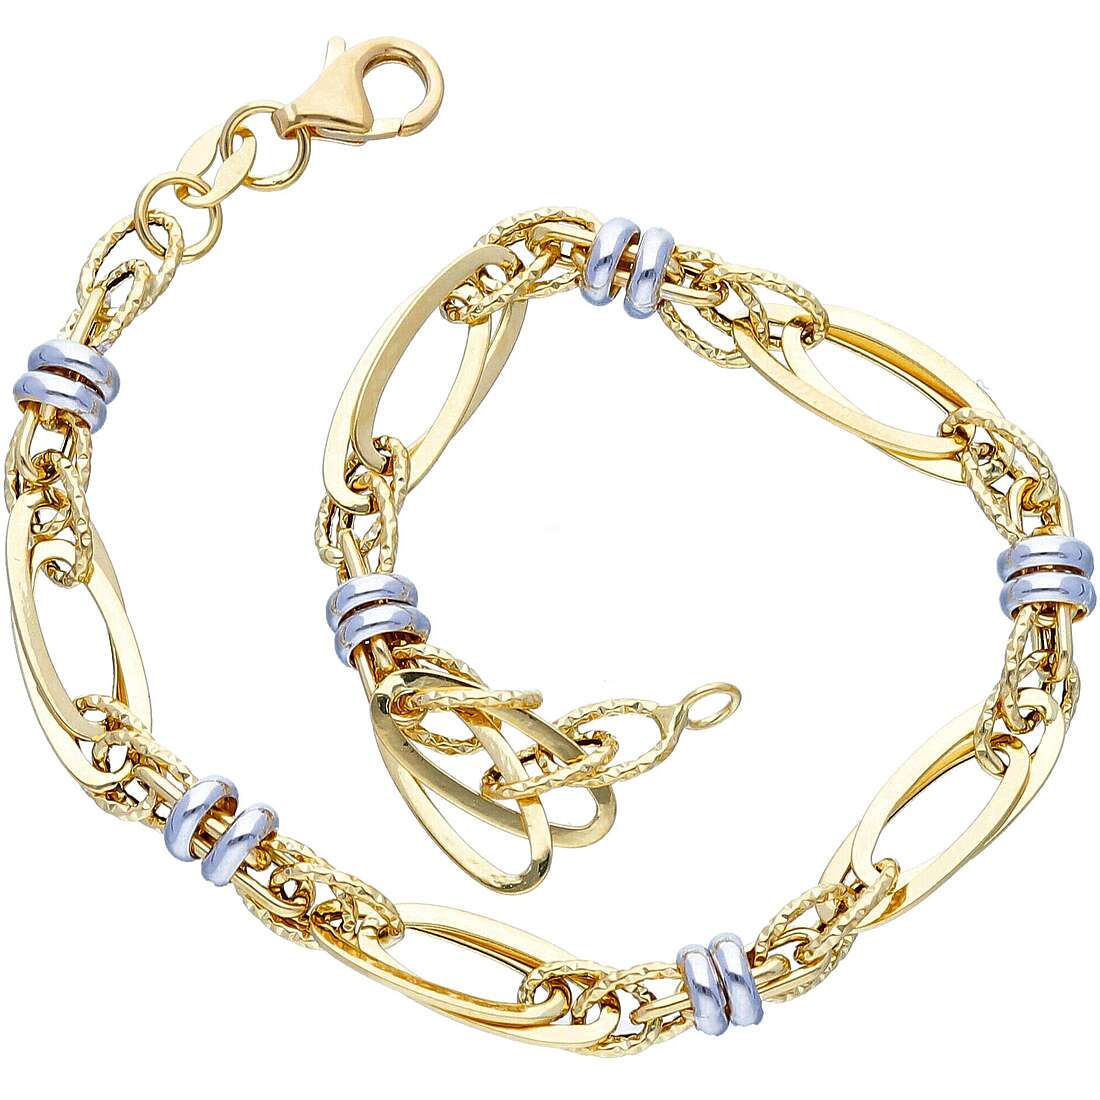 bracelet woman Chain 18 kt Gold jewel GioiaPura Oro 750 GP-S238346